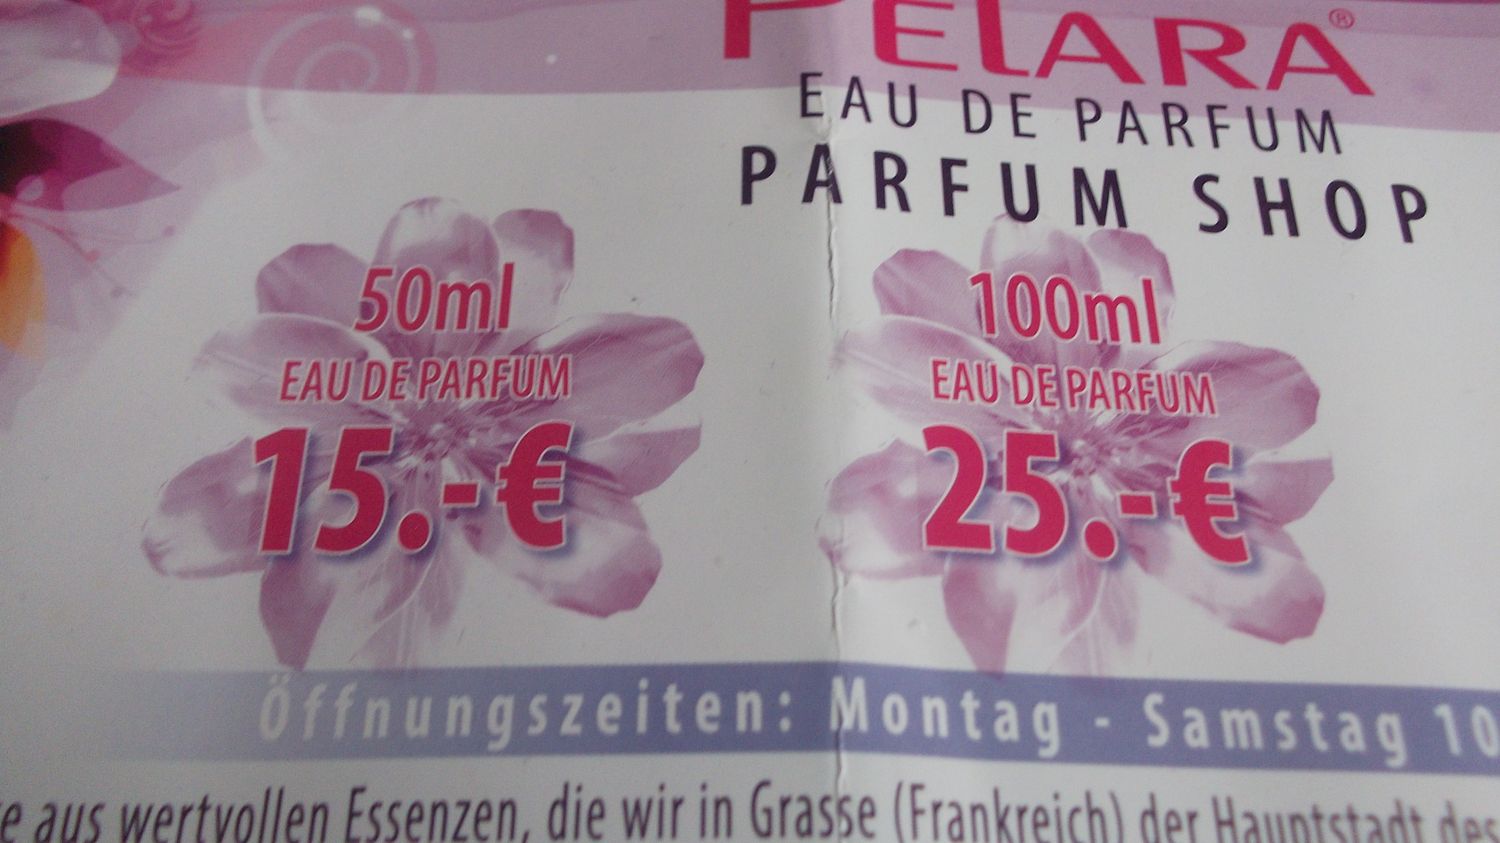 Pelara Parfum Shop Frankfurt Zeilgalerie - 1 Bewertung - Frankfurt am Main  Innenstadt - Zeil | golocal